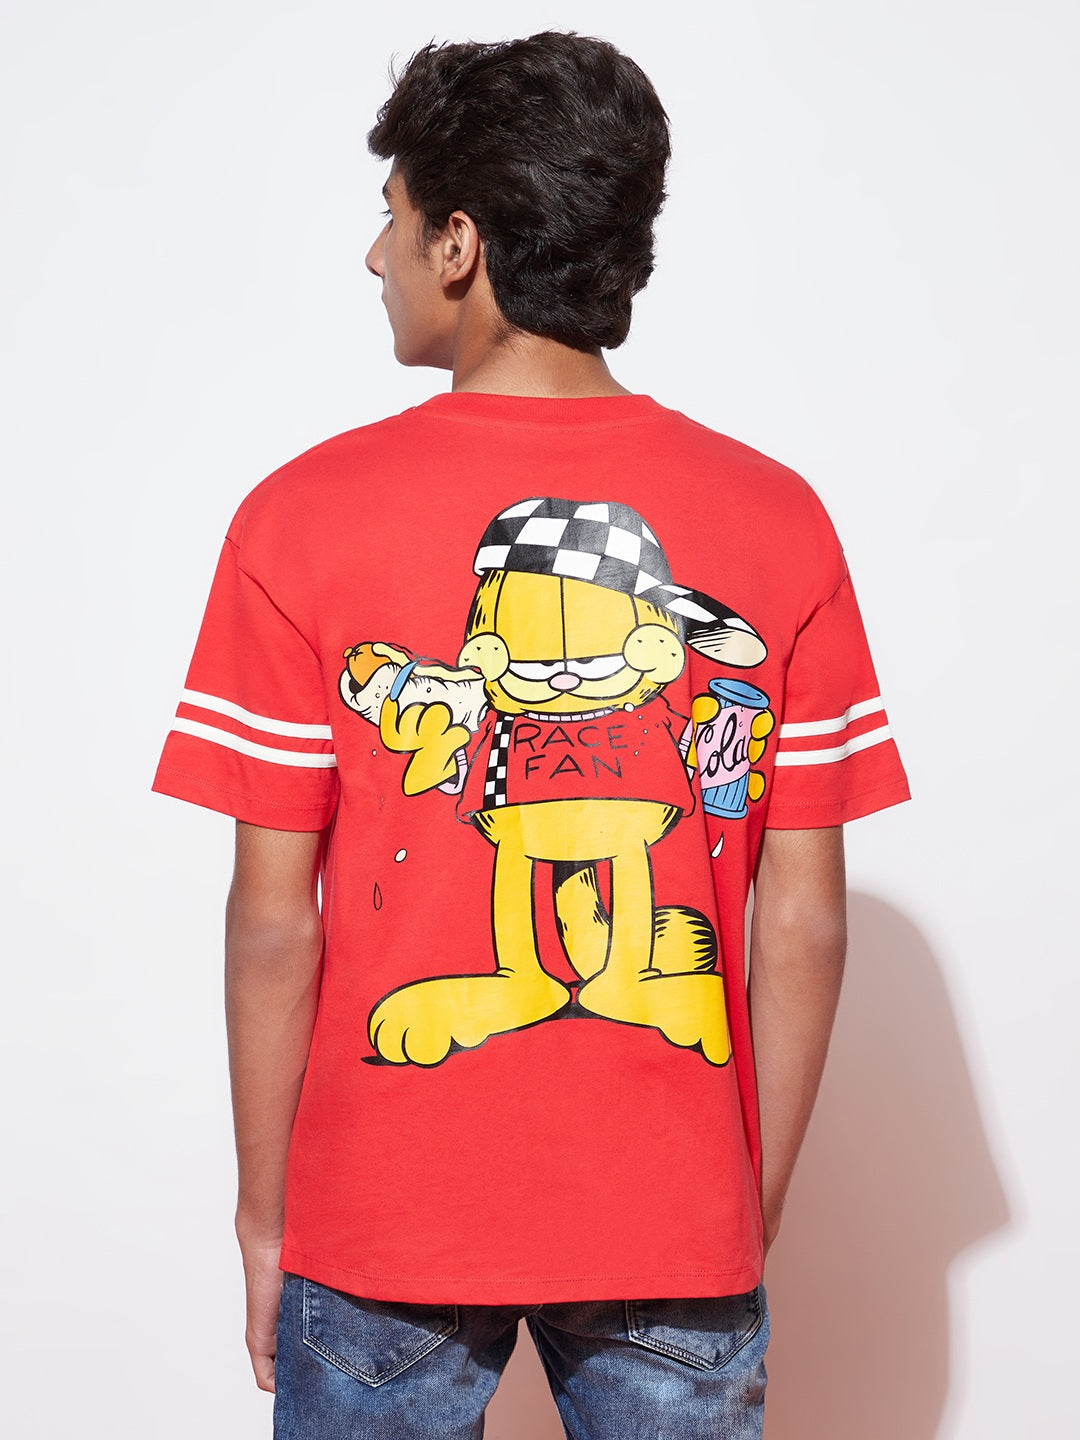 Teen Garfield's Red Oversized T-shirt